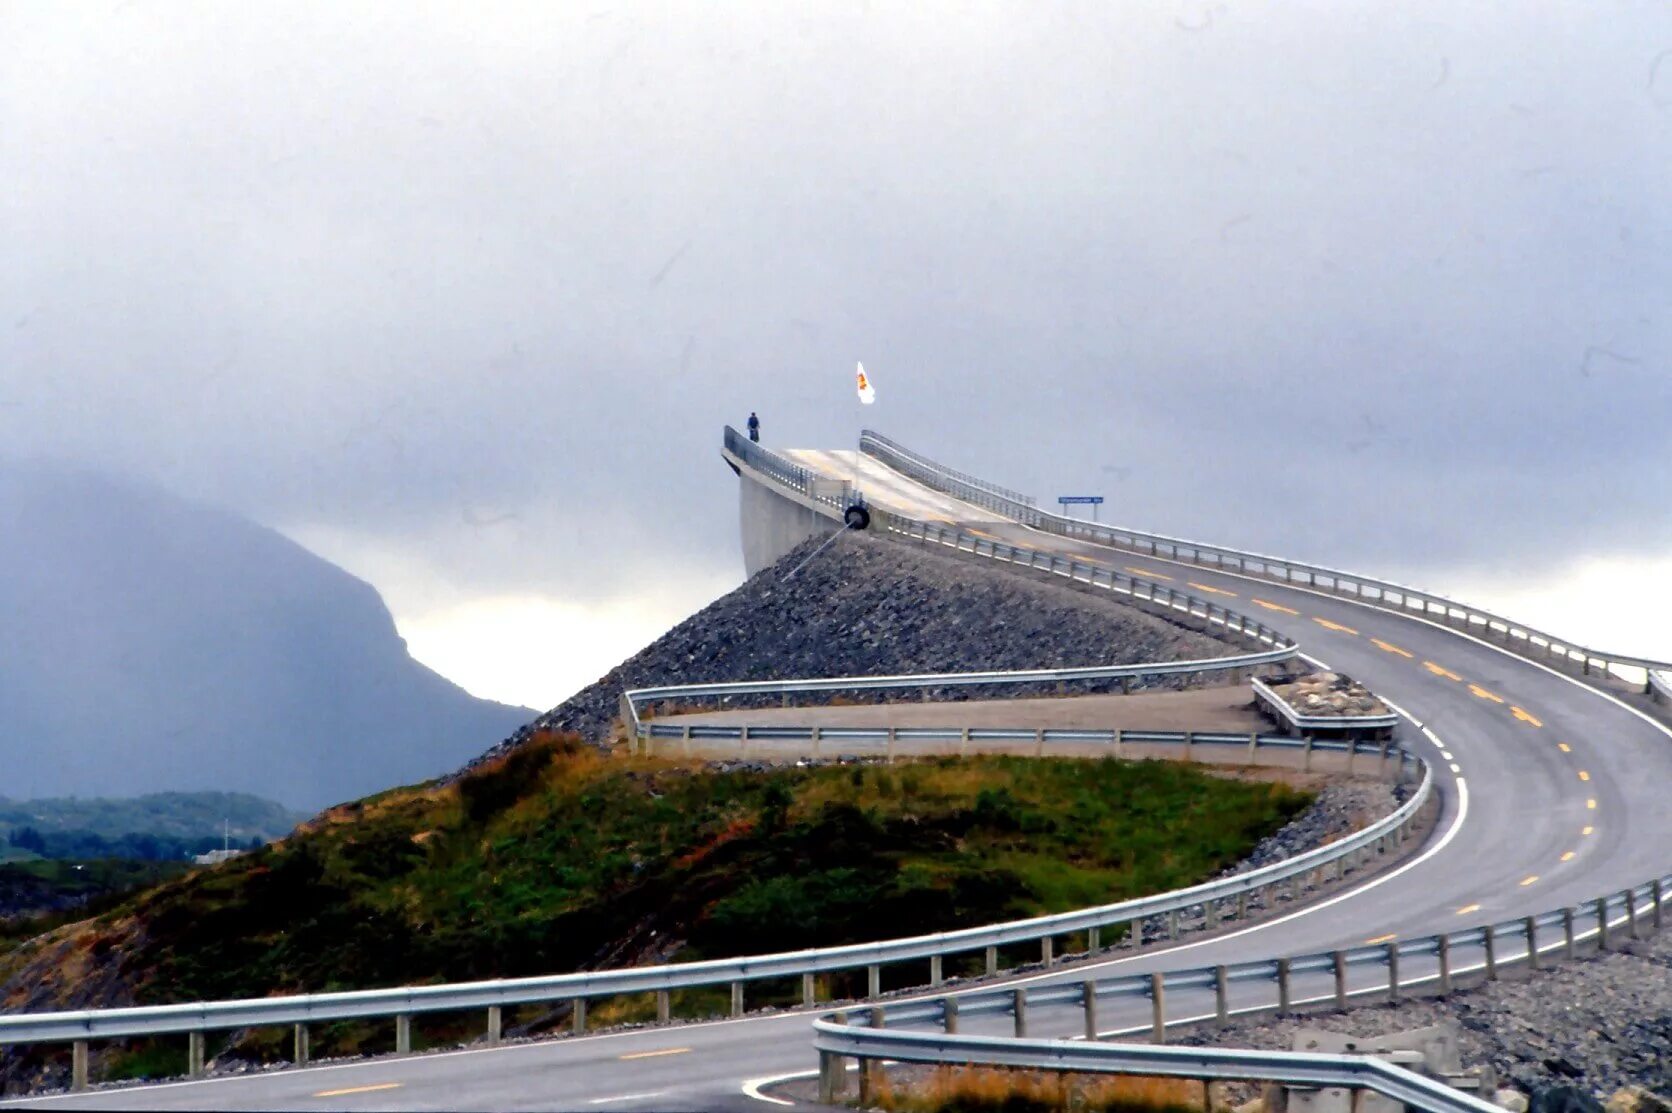 Мост в никуда. Мост Storseisundet, Норвегия. Дорога Атлантик роуд Норвегия. Storsizandeckij most norwegija. Мост “Storseisundet Bridge”.